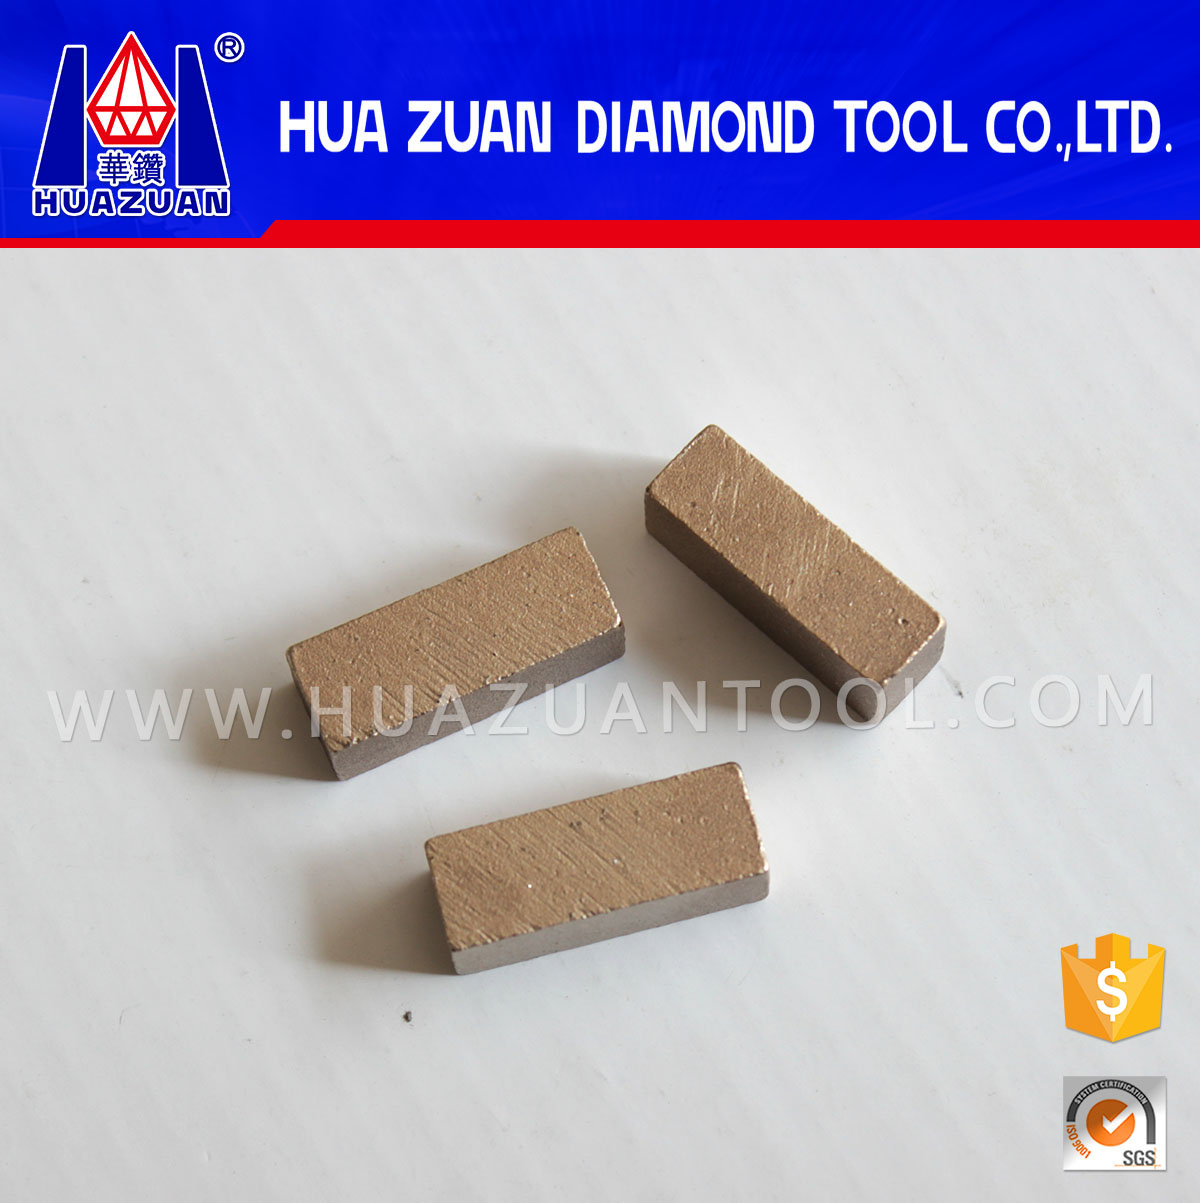 Top Quality 64inch 1600mm Diamond Segment and Diamond Tips